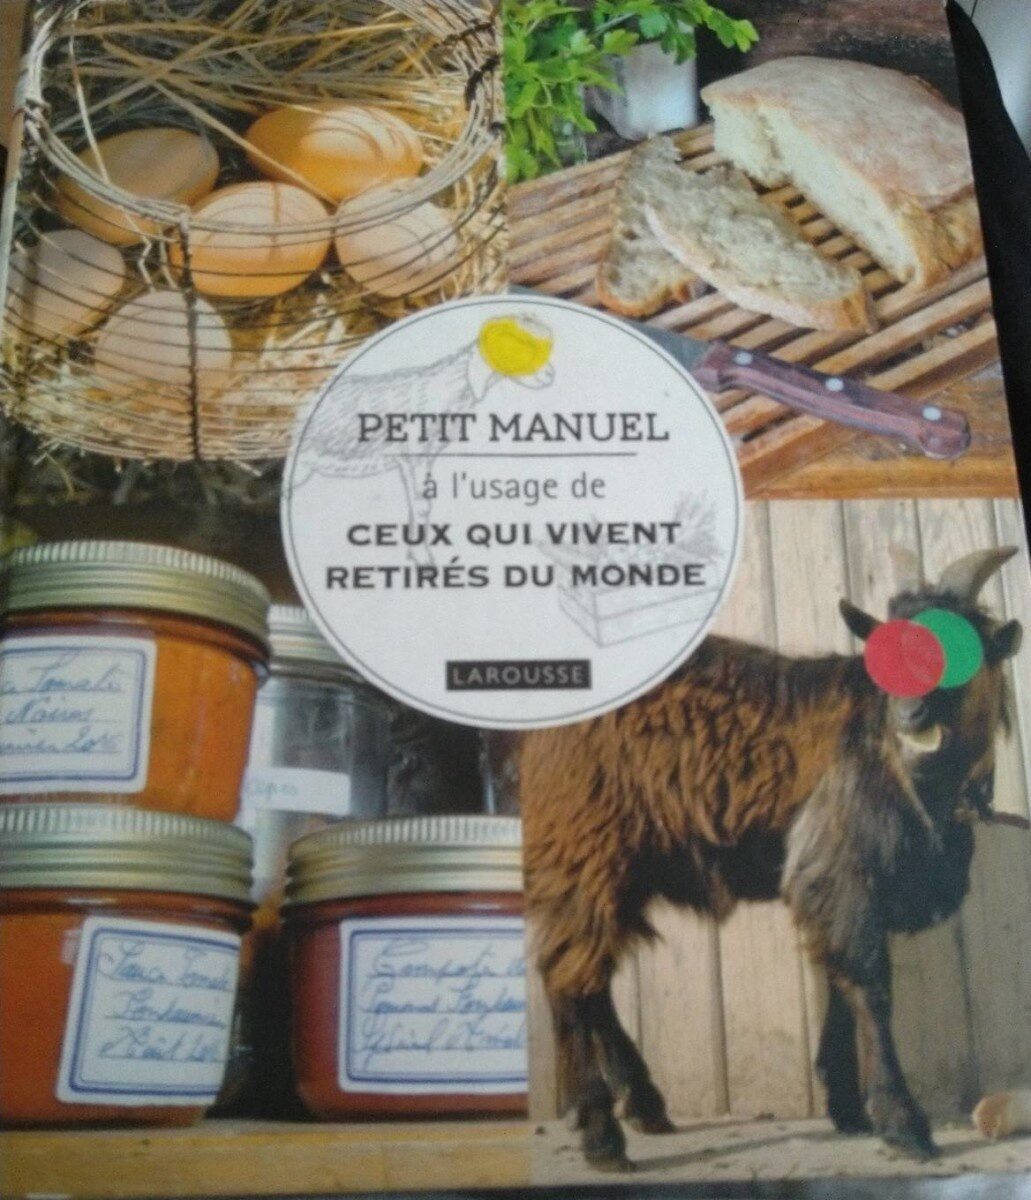 Petit manuel - Product - fr